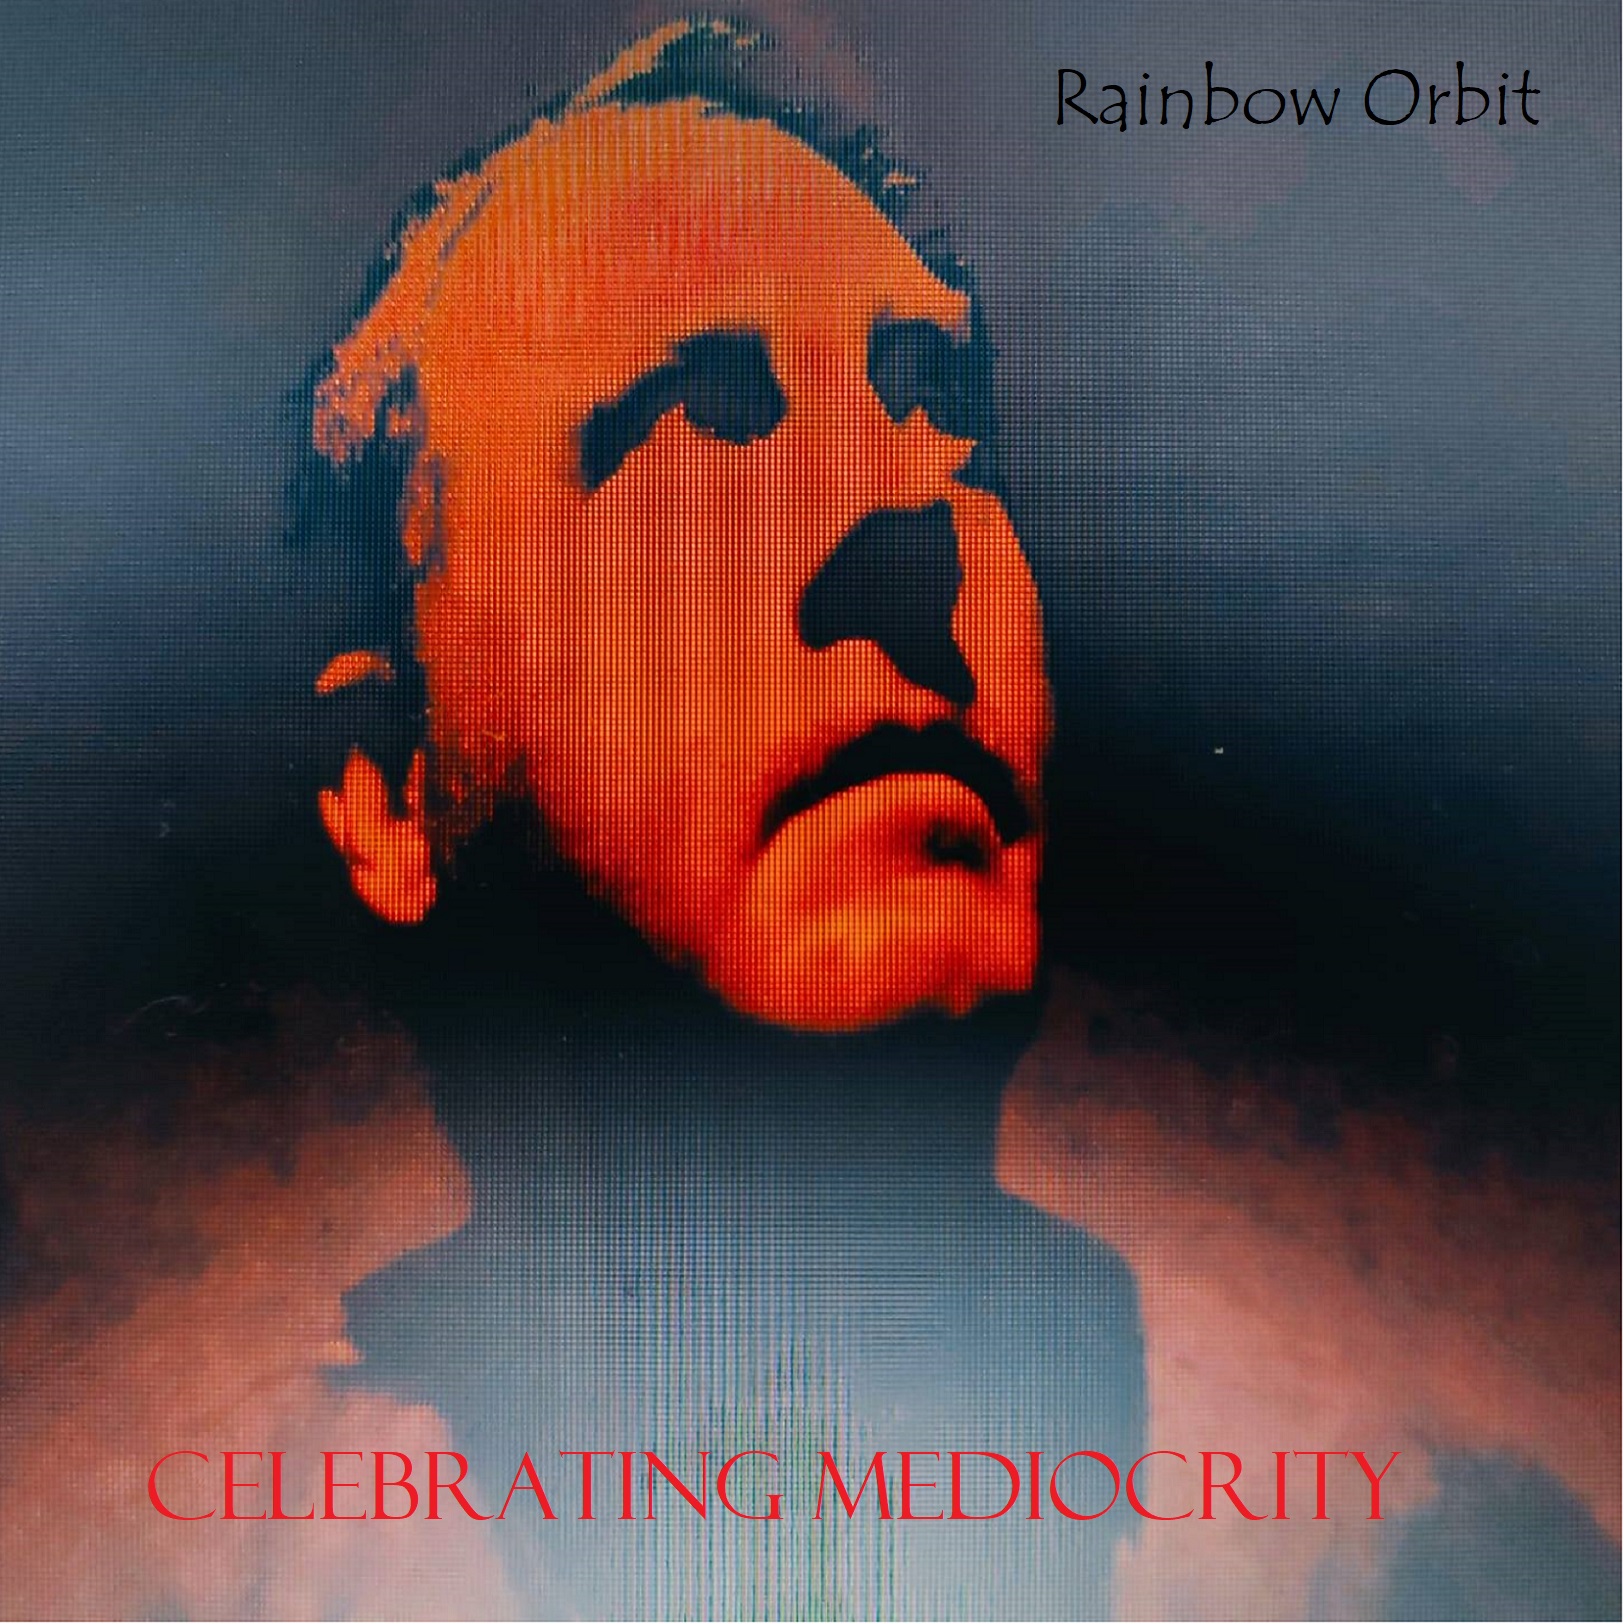 Rainbow Orbit Celebrating Mediocrity cover artwork